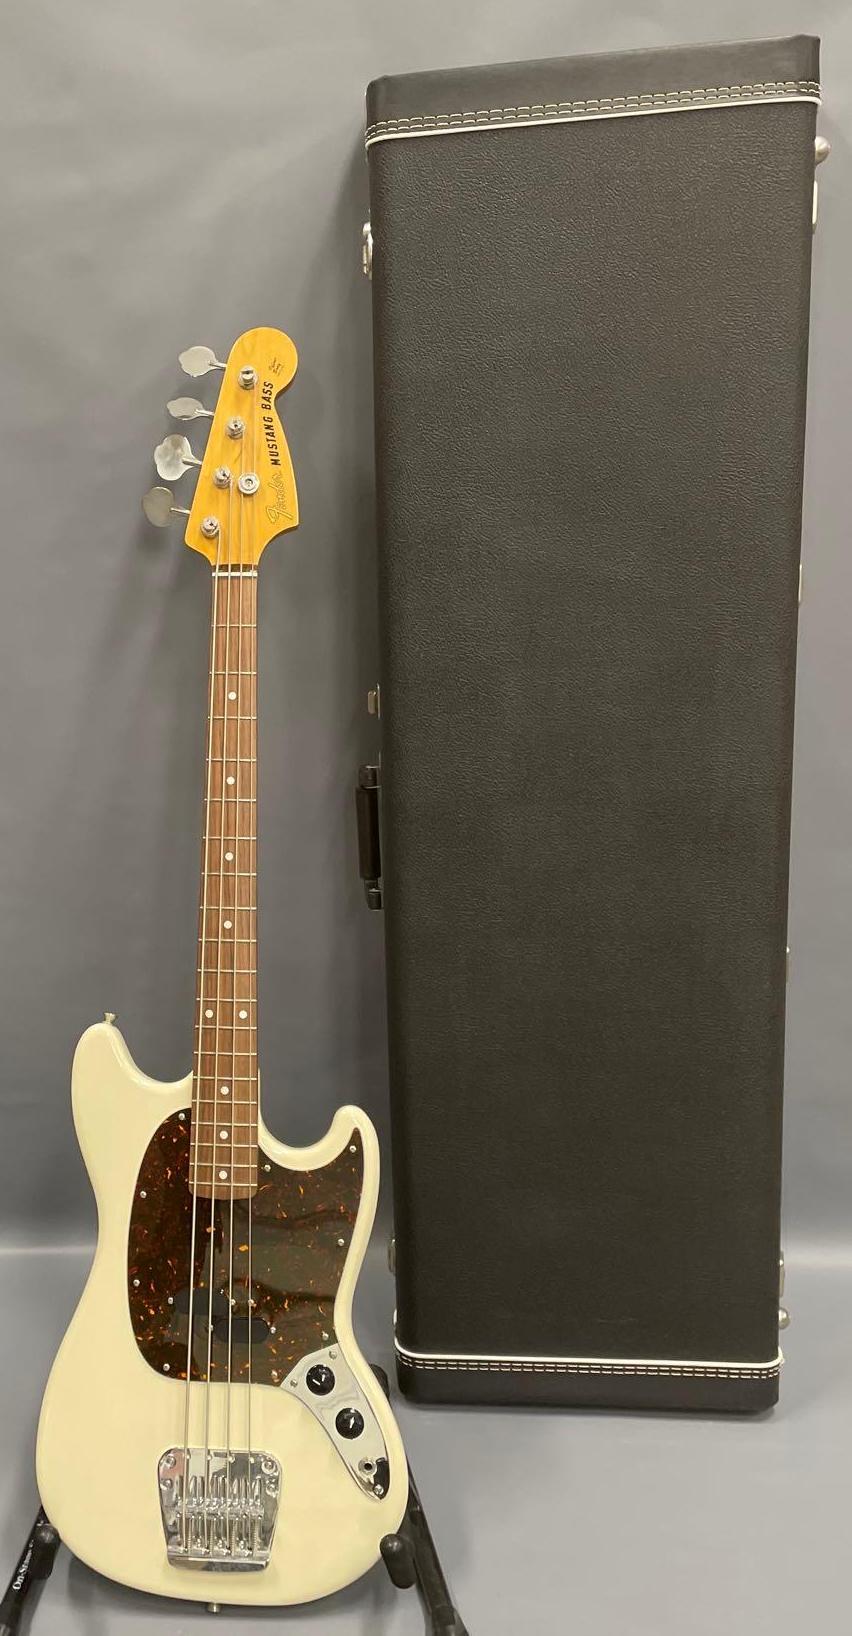 Fender Japan Mustang bass guitar in hard case